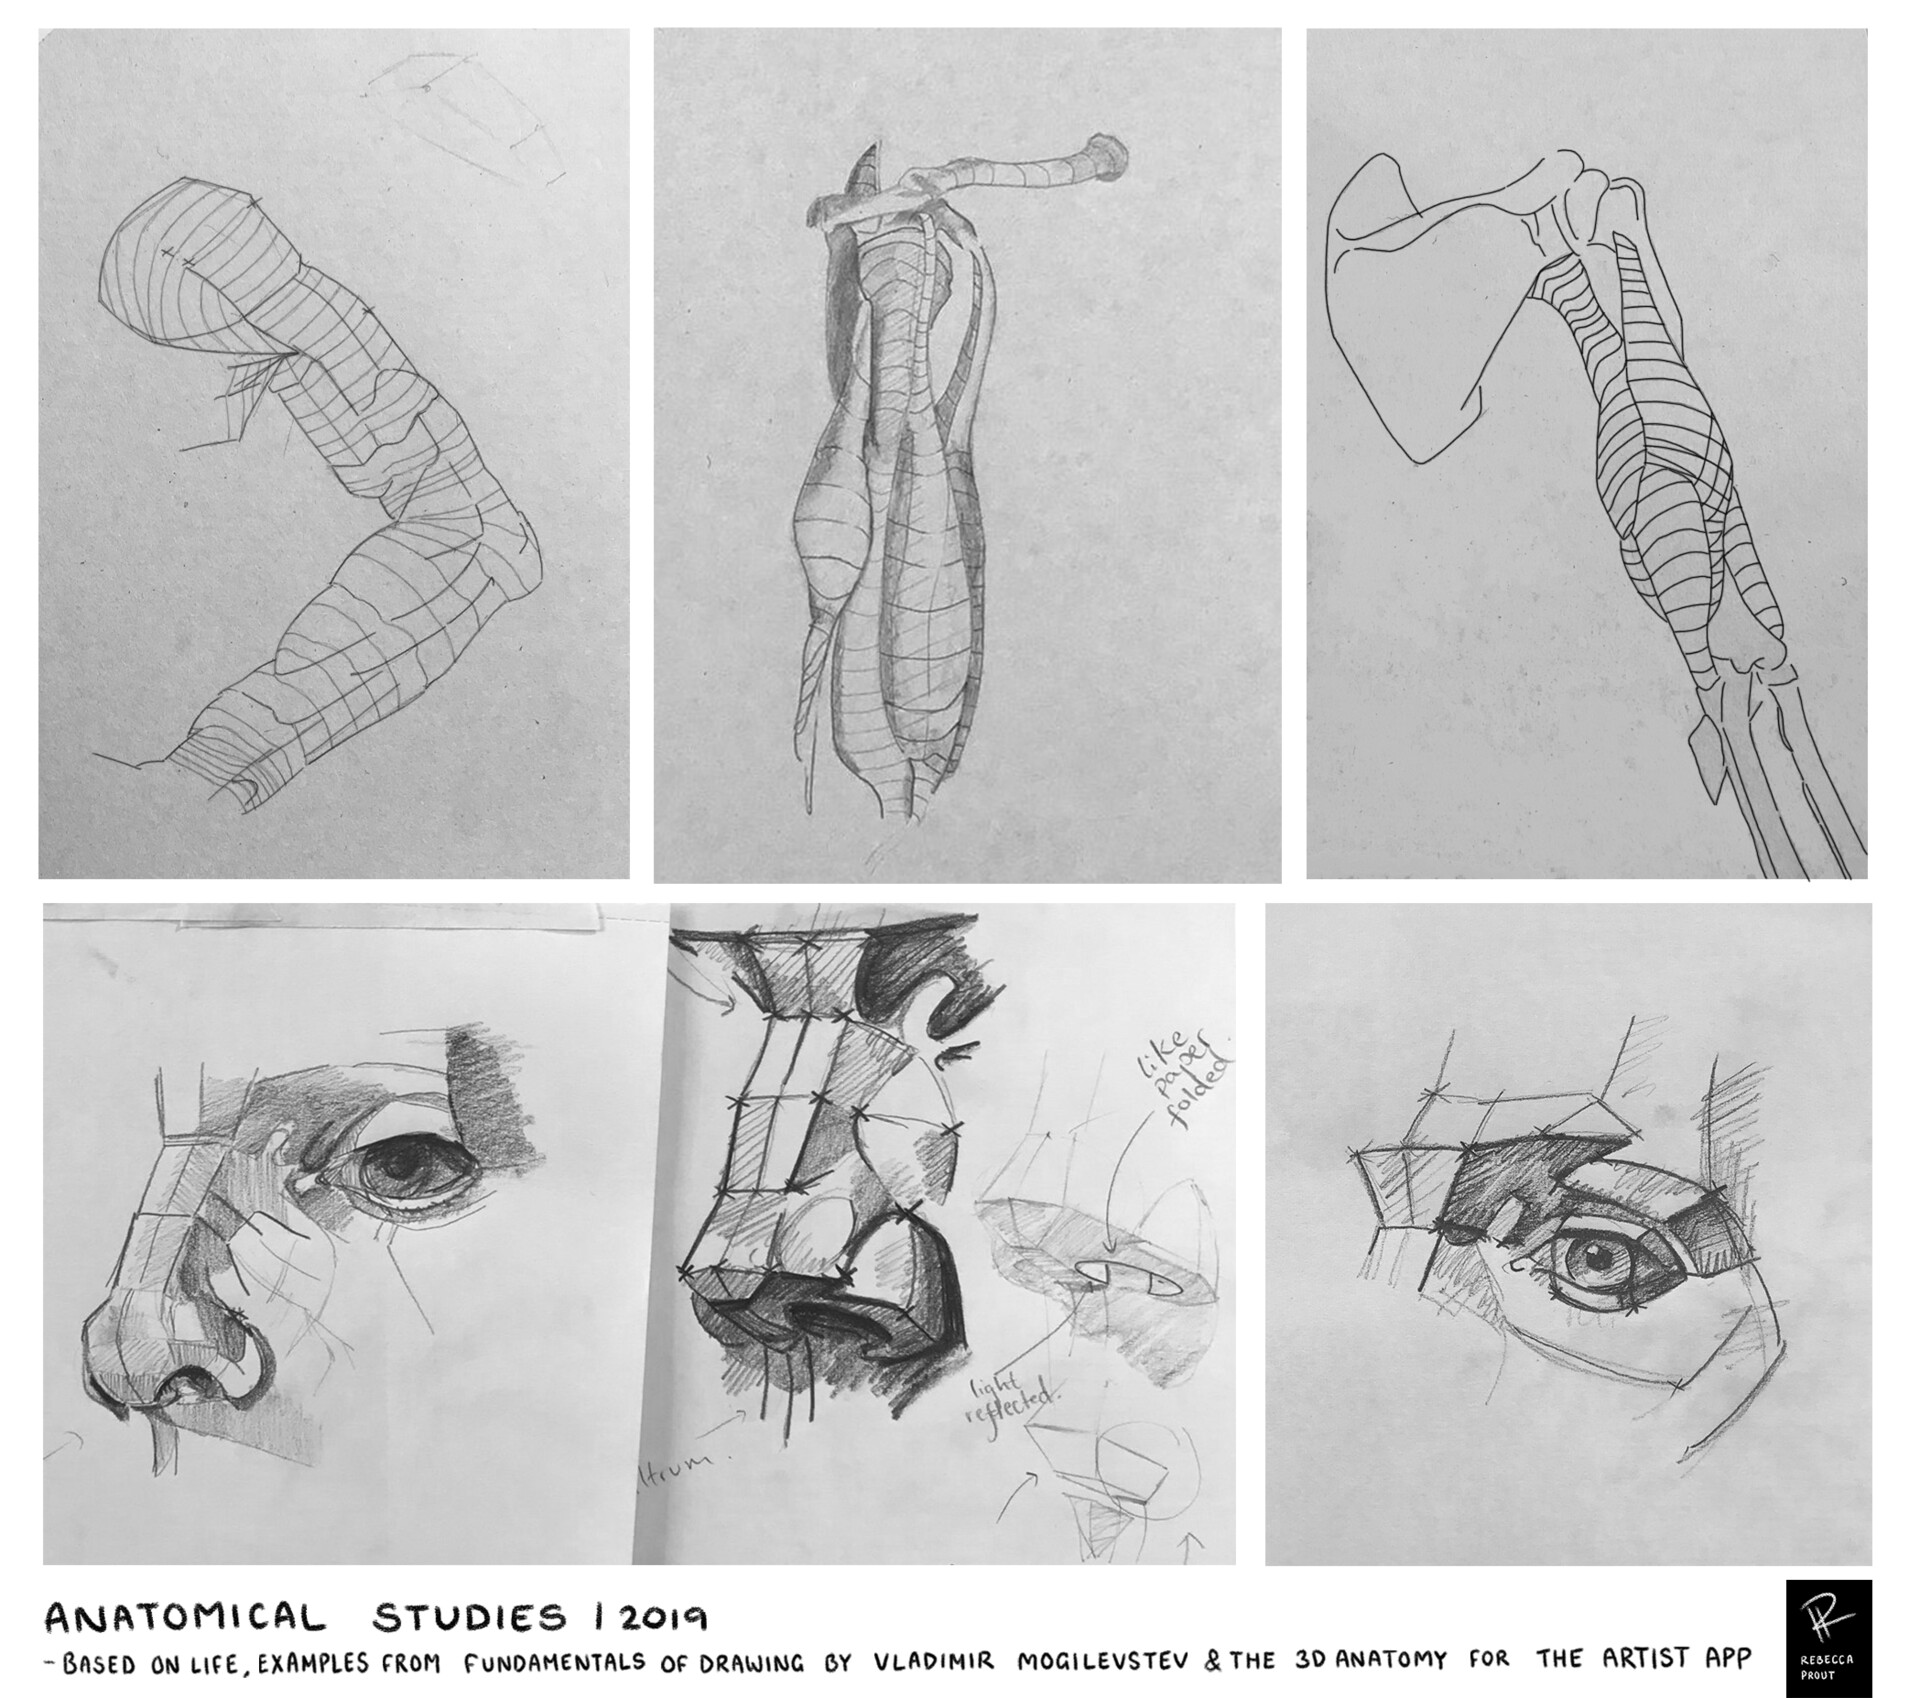 ArtStation Anatomy & Life Drawing